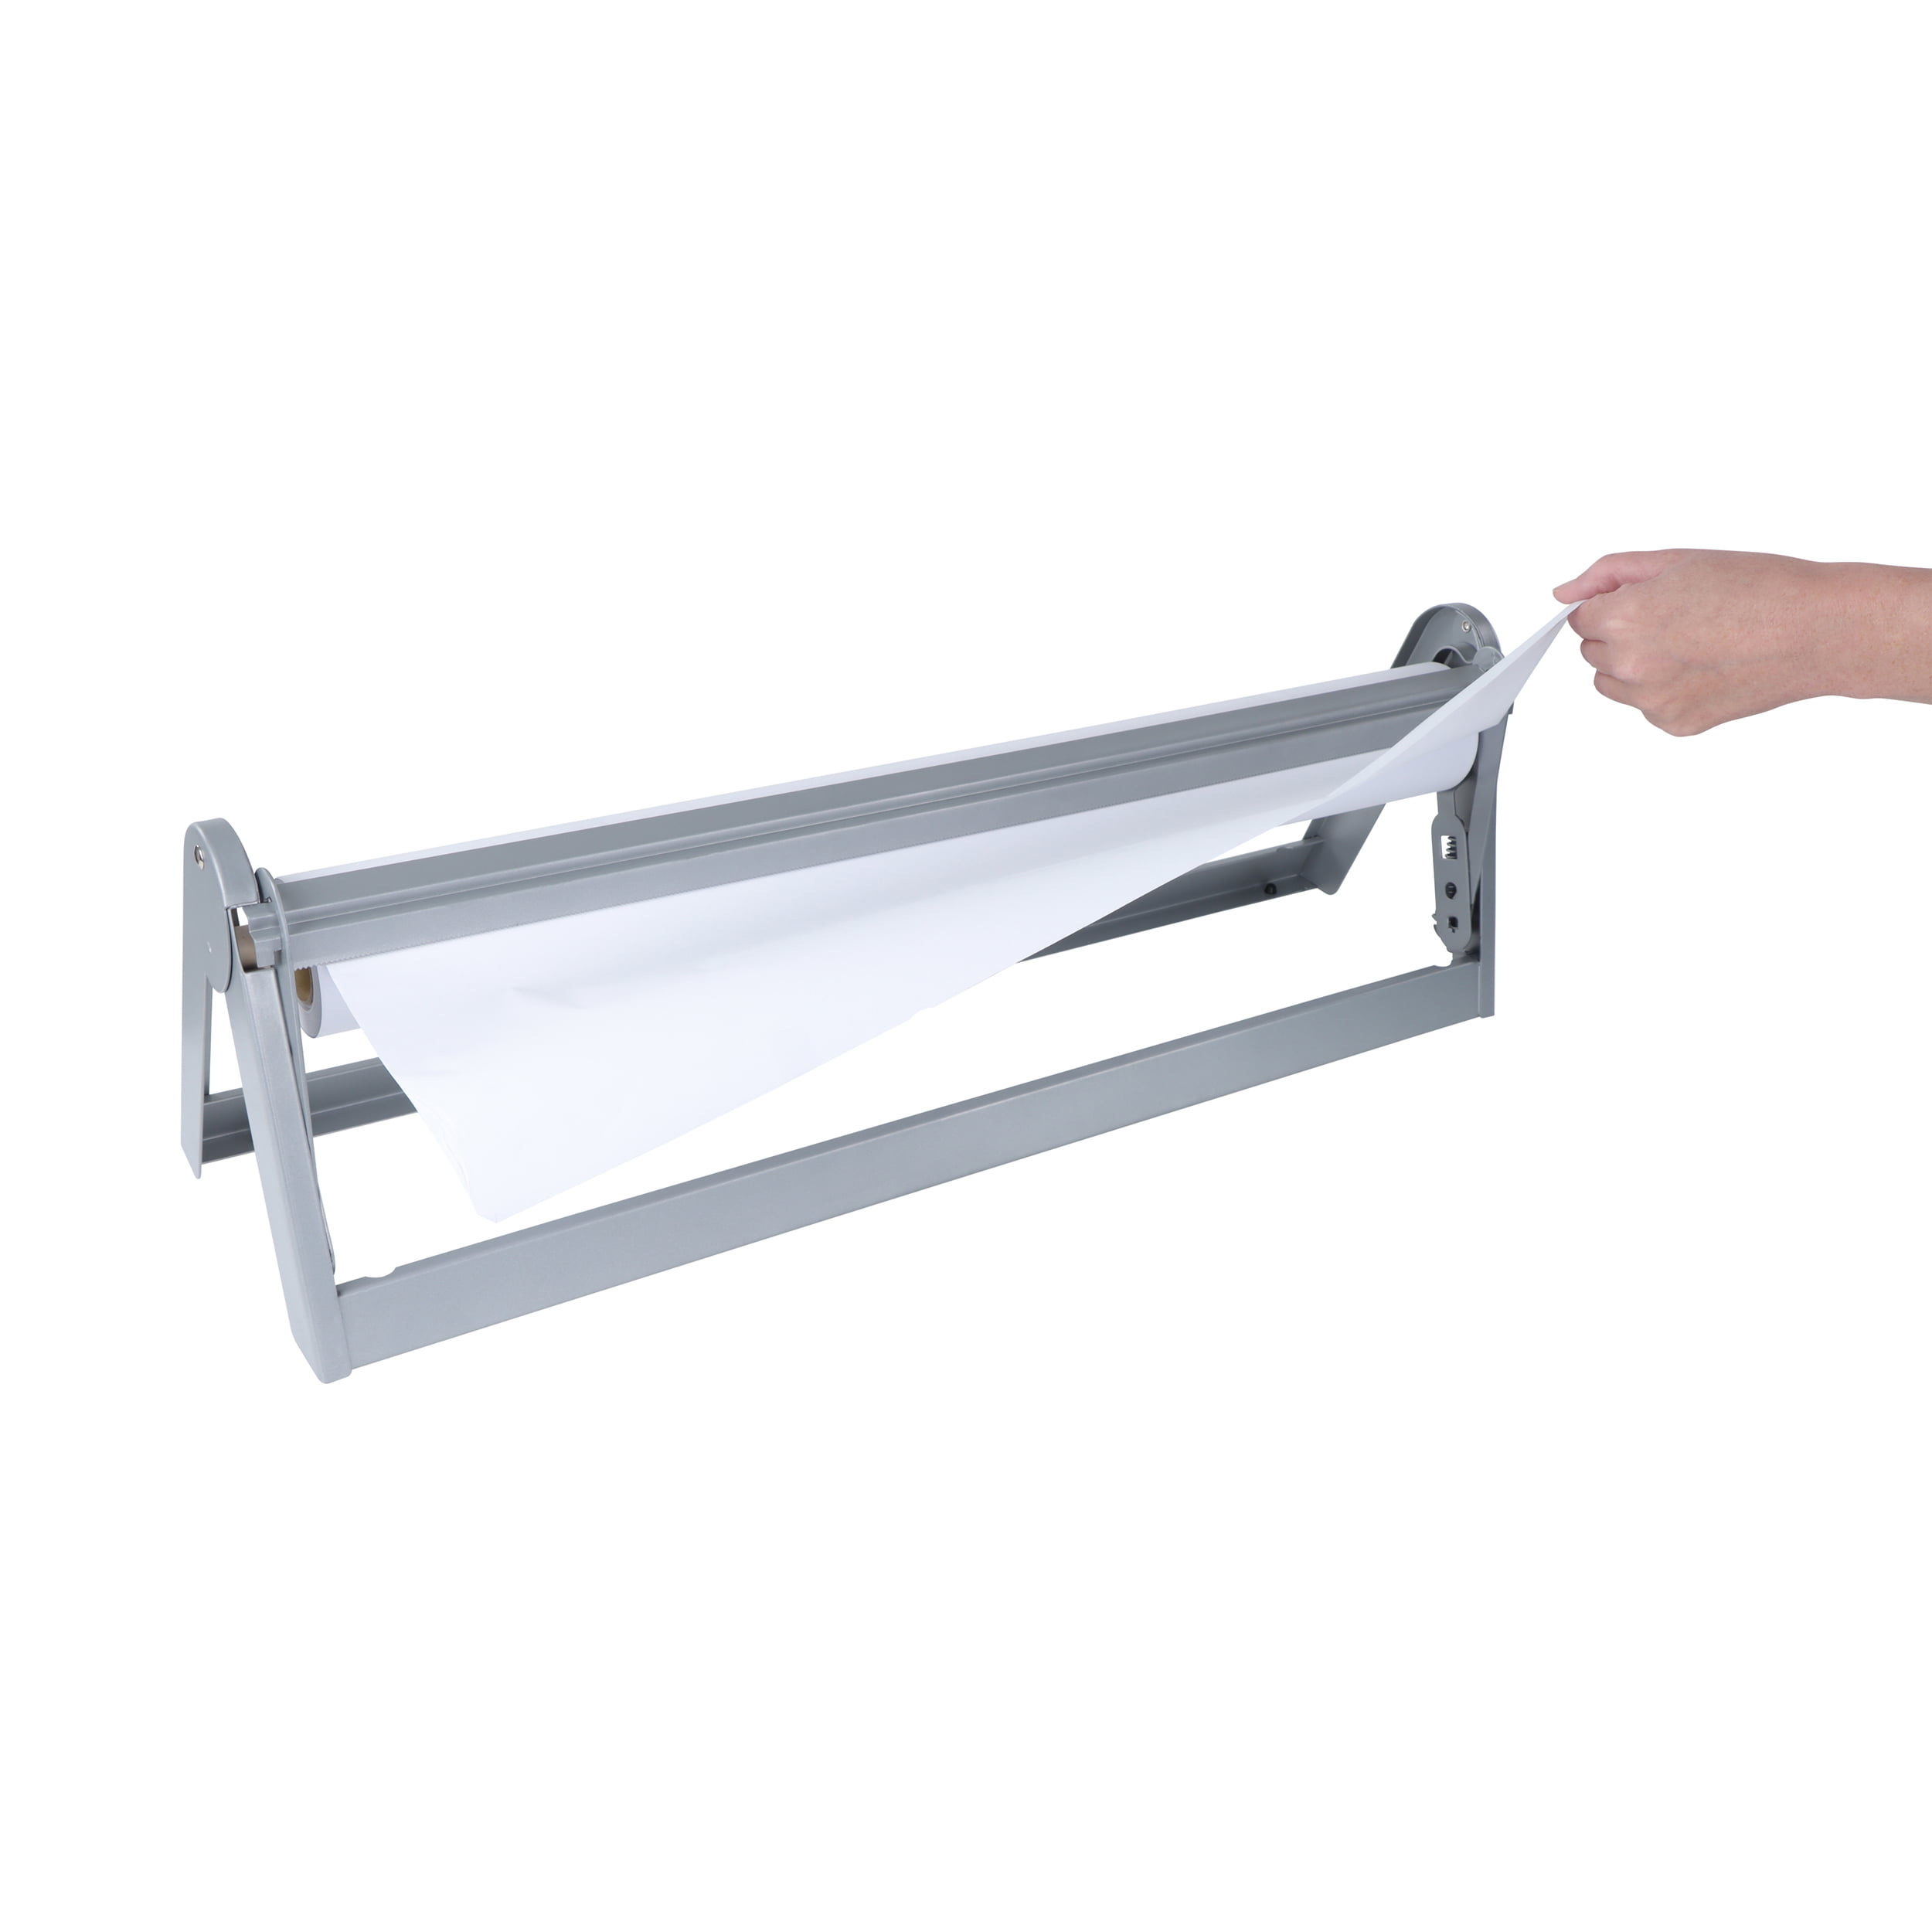 Paper Roll Cutter - Butcher Paper Dispenser - Heavy Duty 24 inch Paper Roll, Silver